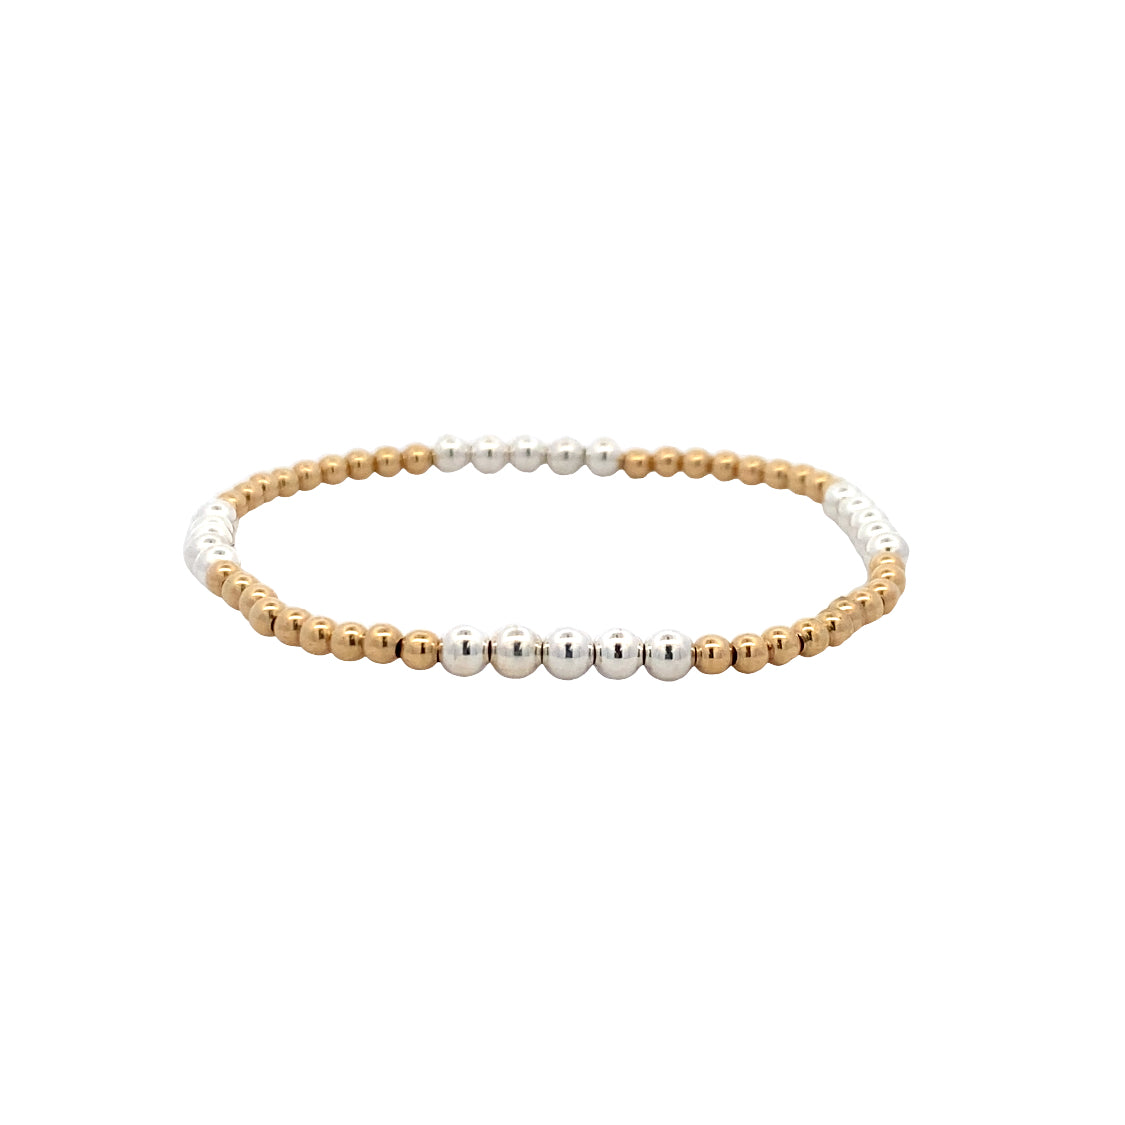 Karen Lazar Design Yellolw Gold Bead Bracelets 3YGF4ss700